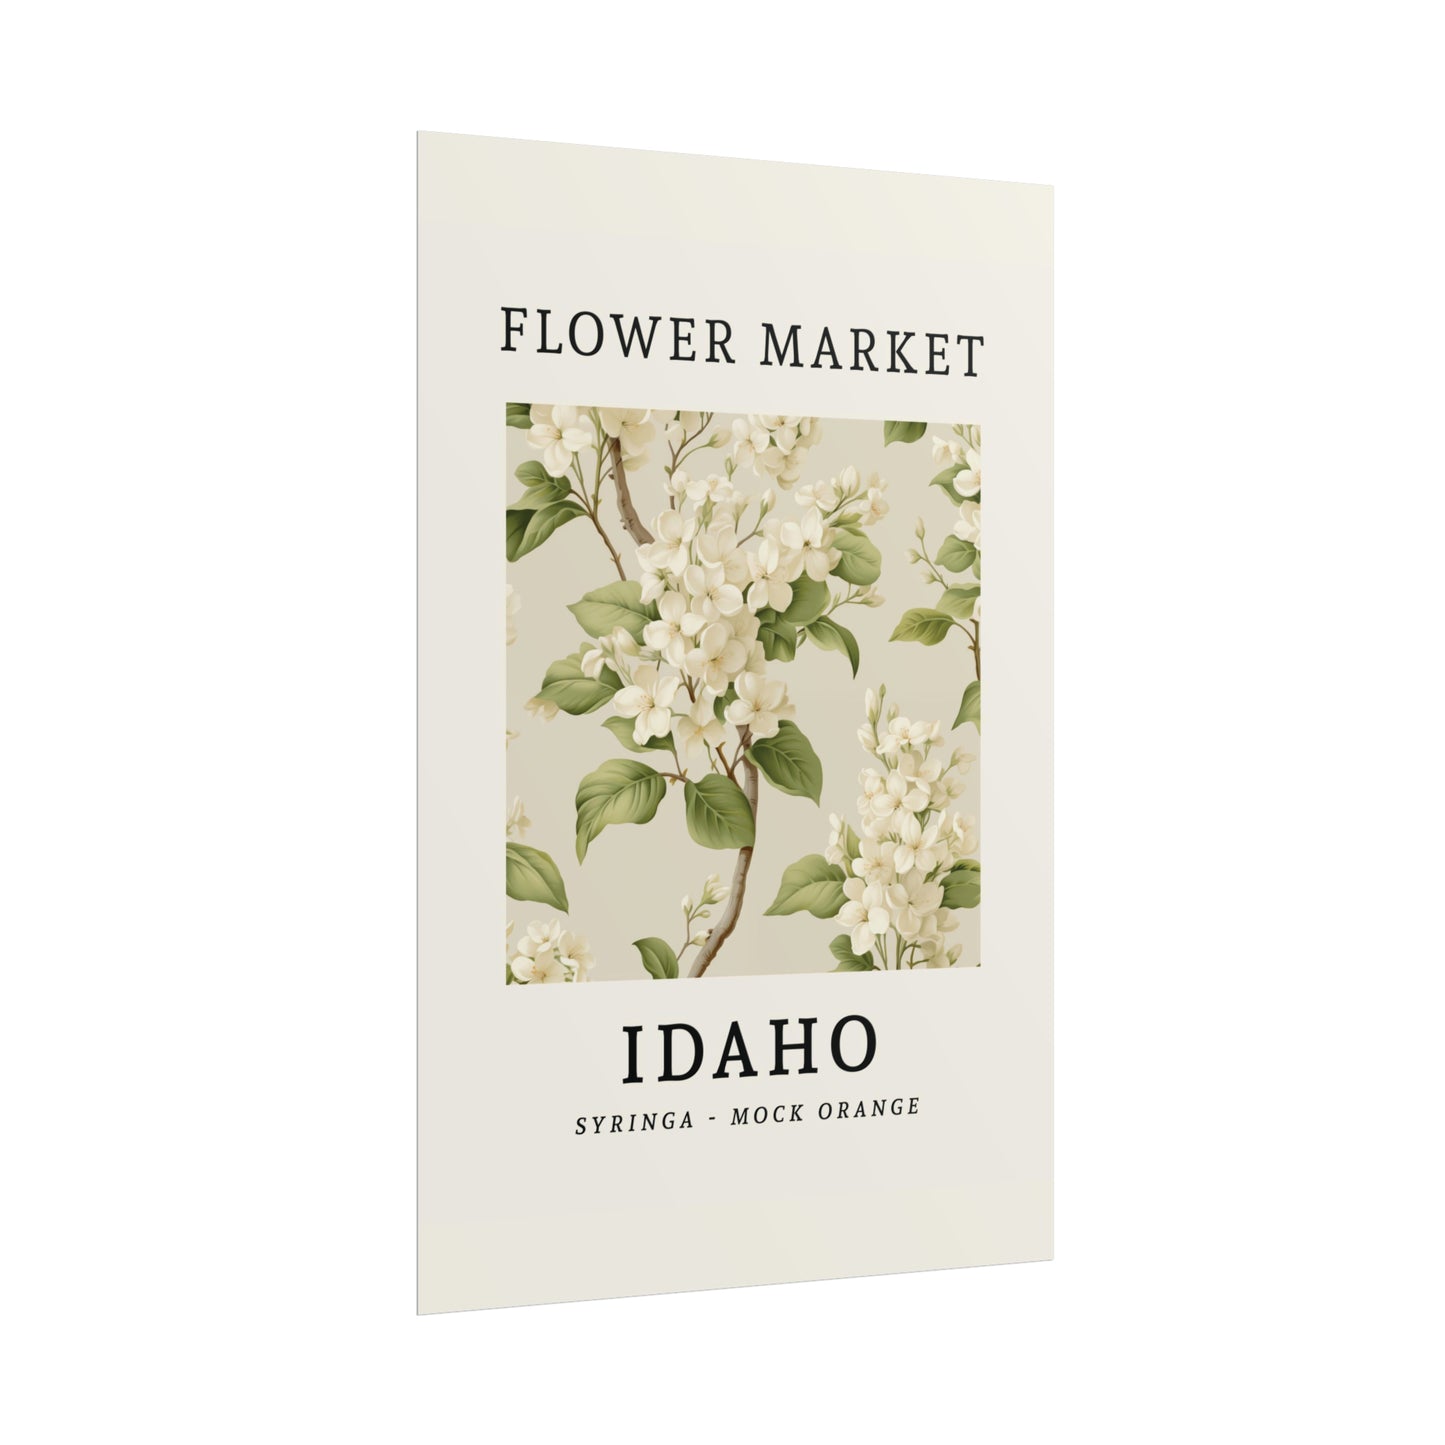 IDAHO FLOWER MARKET Poster Syringa Floral Bloom Print